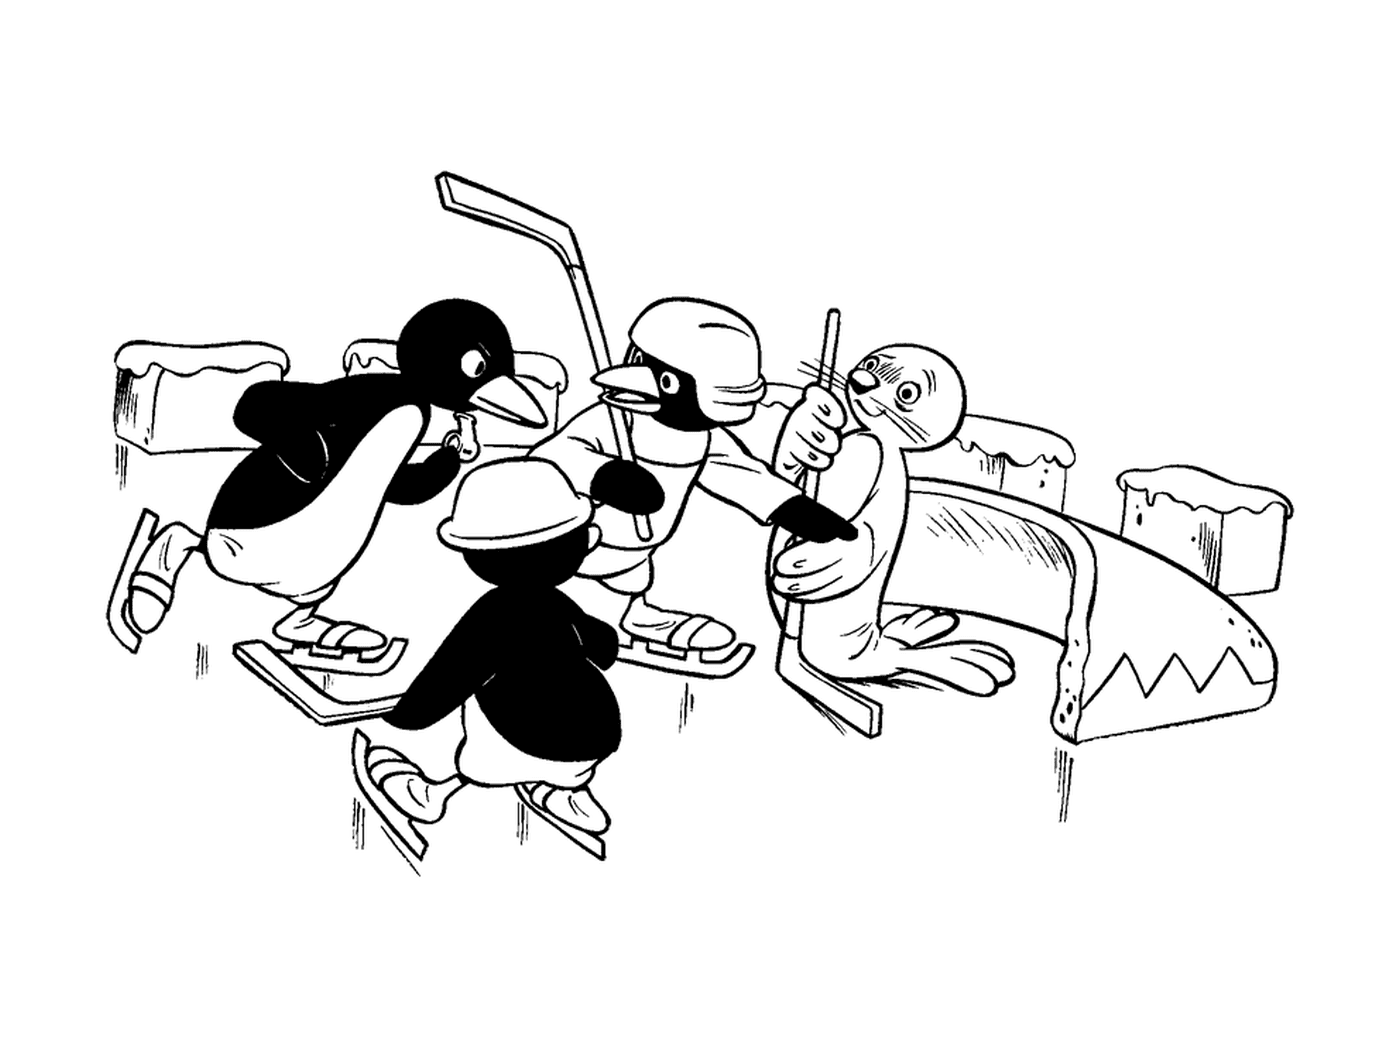  Pingu plays hockey with his friends 